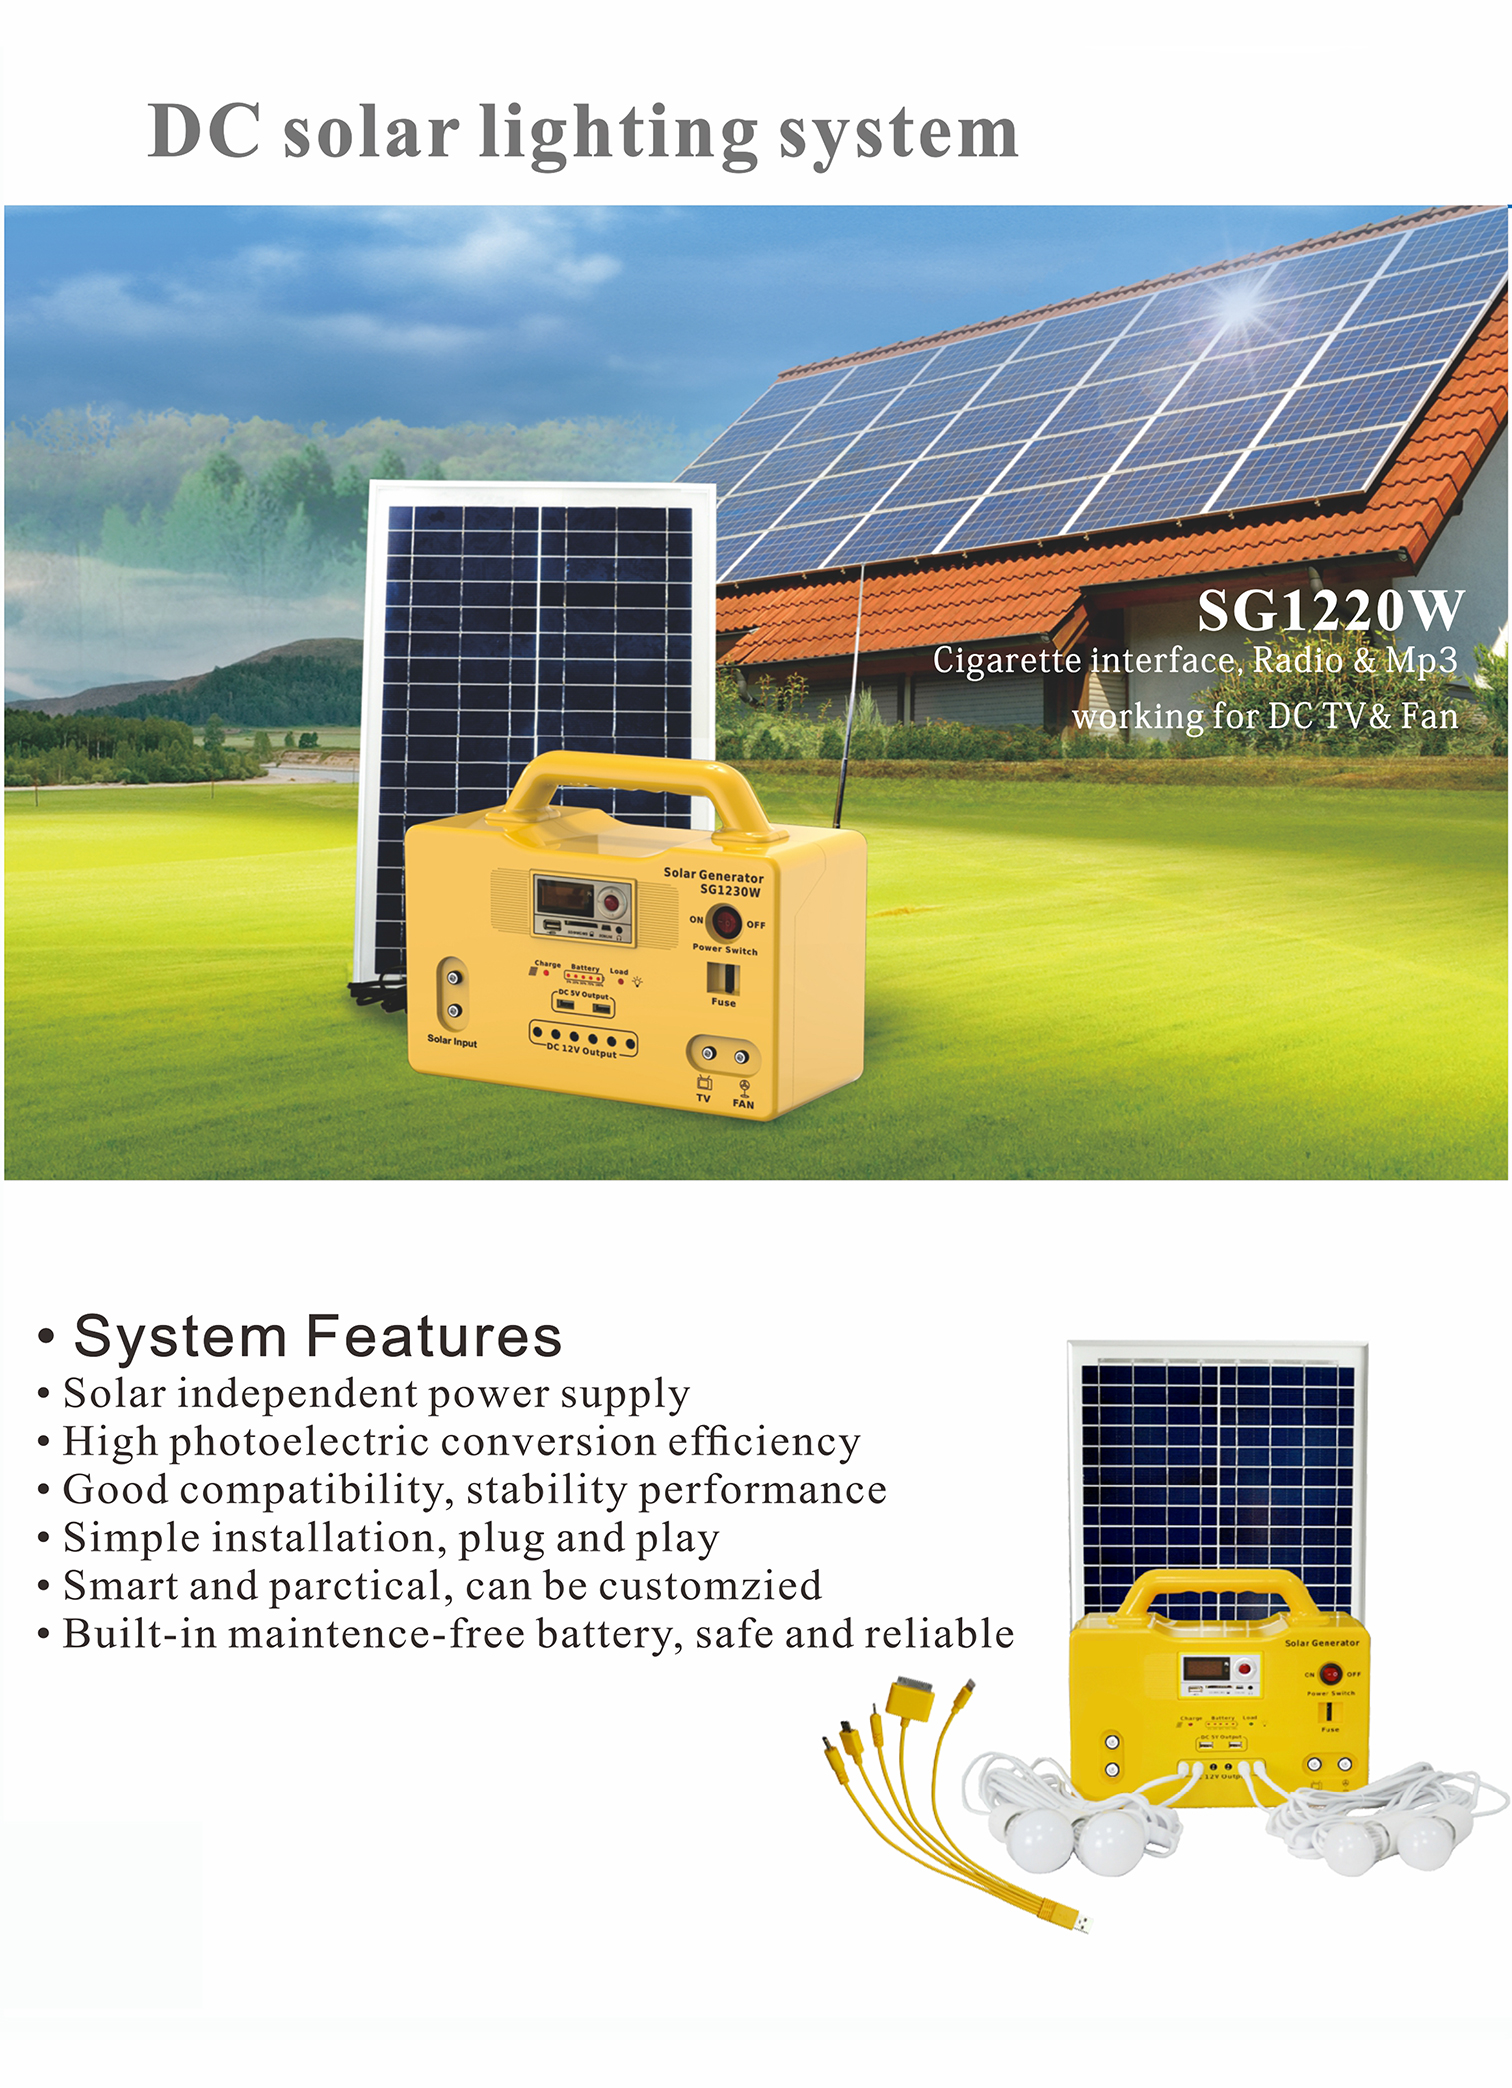 DC Solar Generator 20W Solar System, with MP3 player, Radio, USB and Lighting